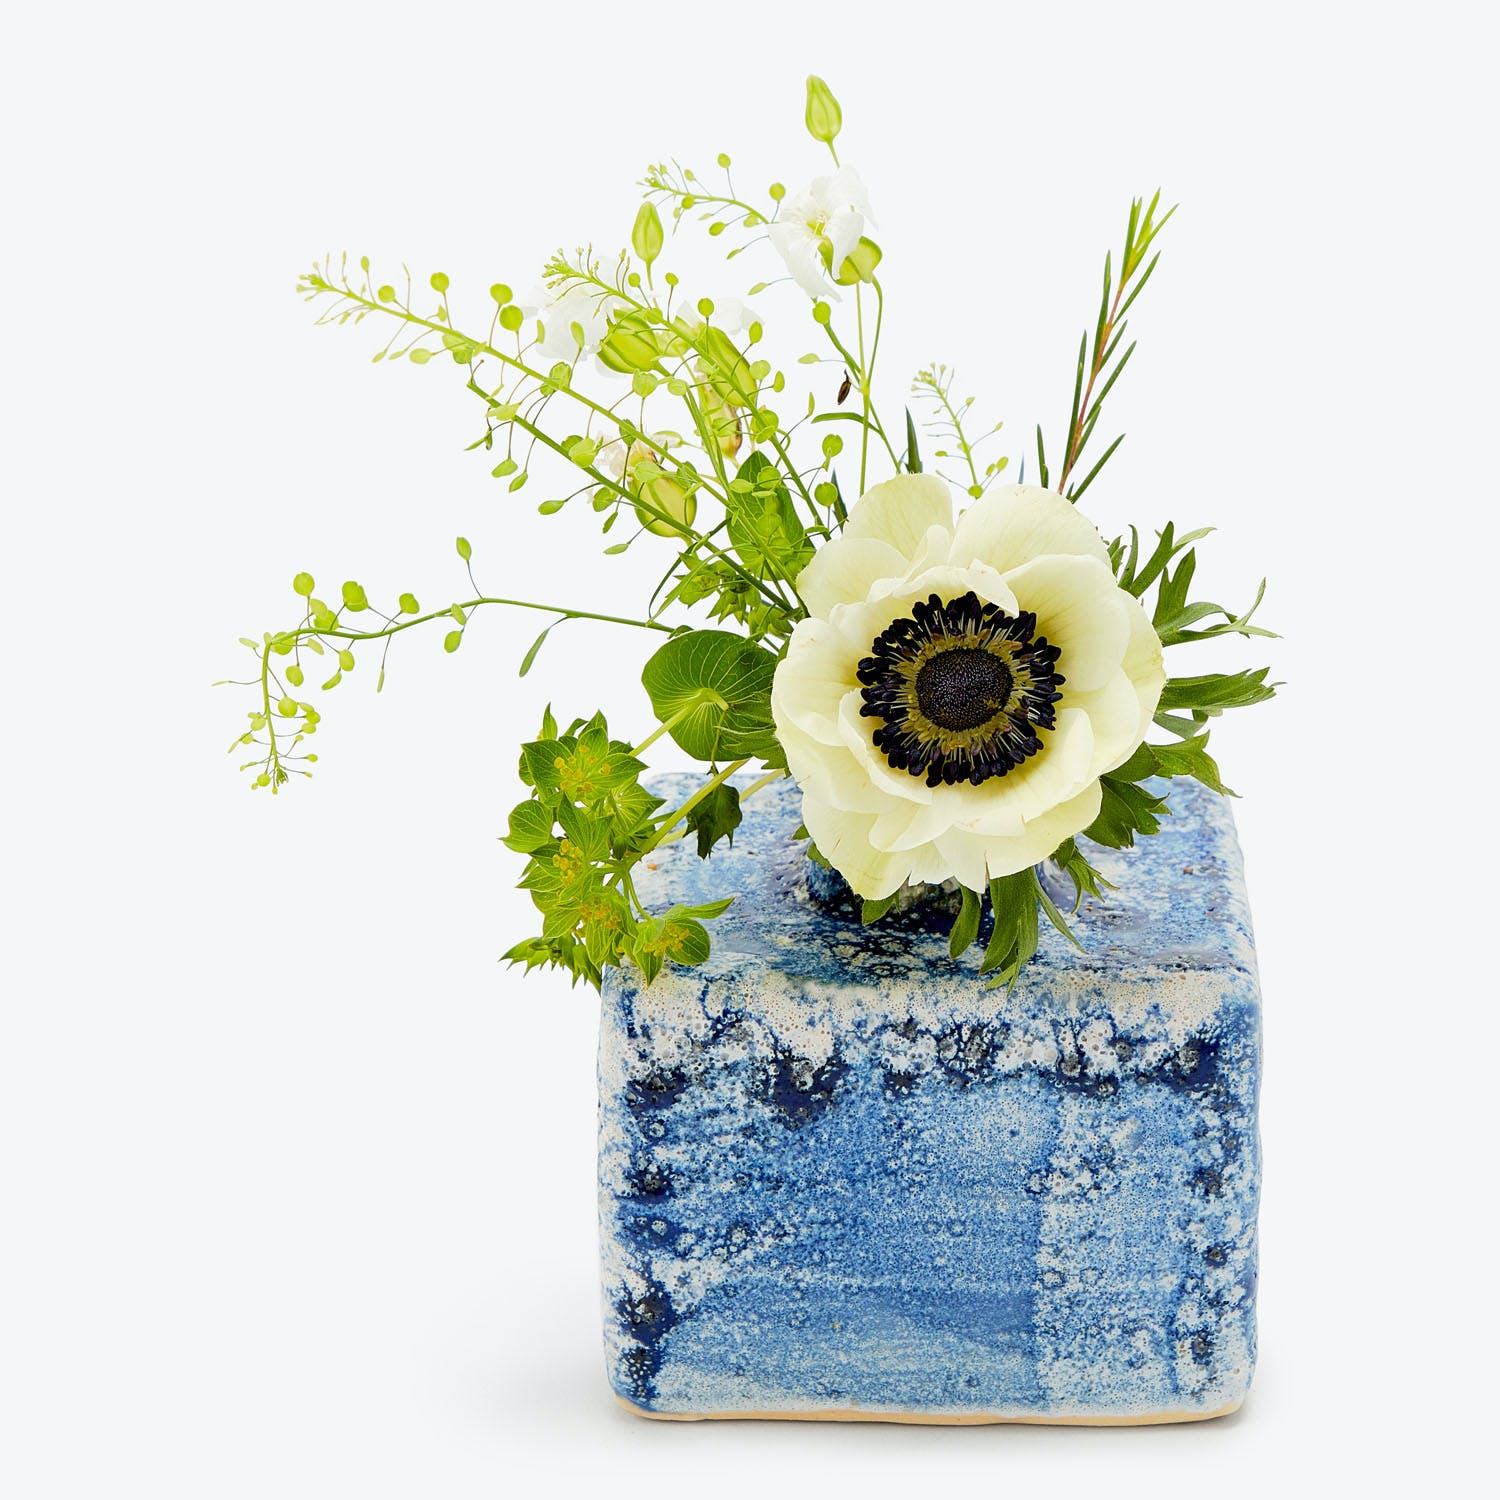 Vibrant floral arrangement in a rustic blue textured vase